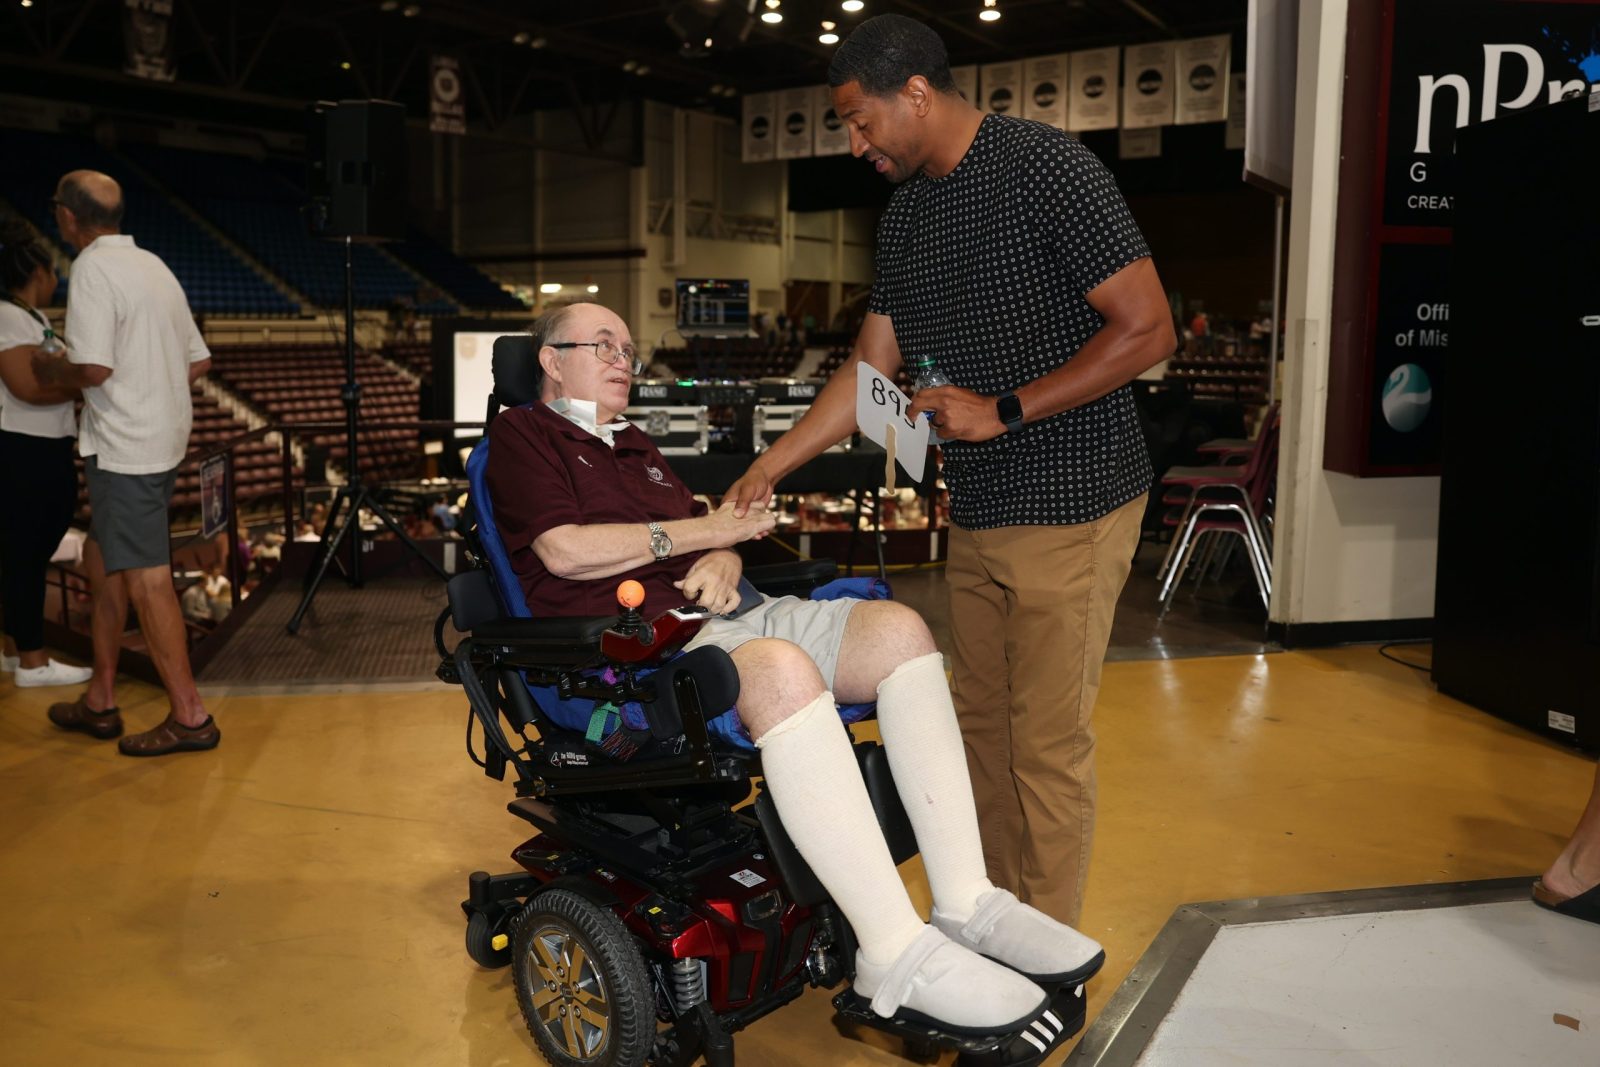 Art Hains, wearing a maroon shirt, sits in his wheelchair talking to Missouri State Bears basketball coach Dana Ford.